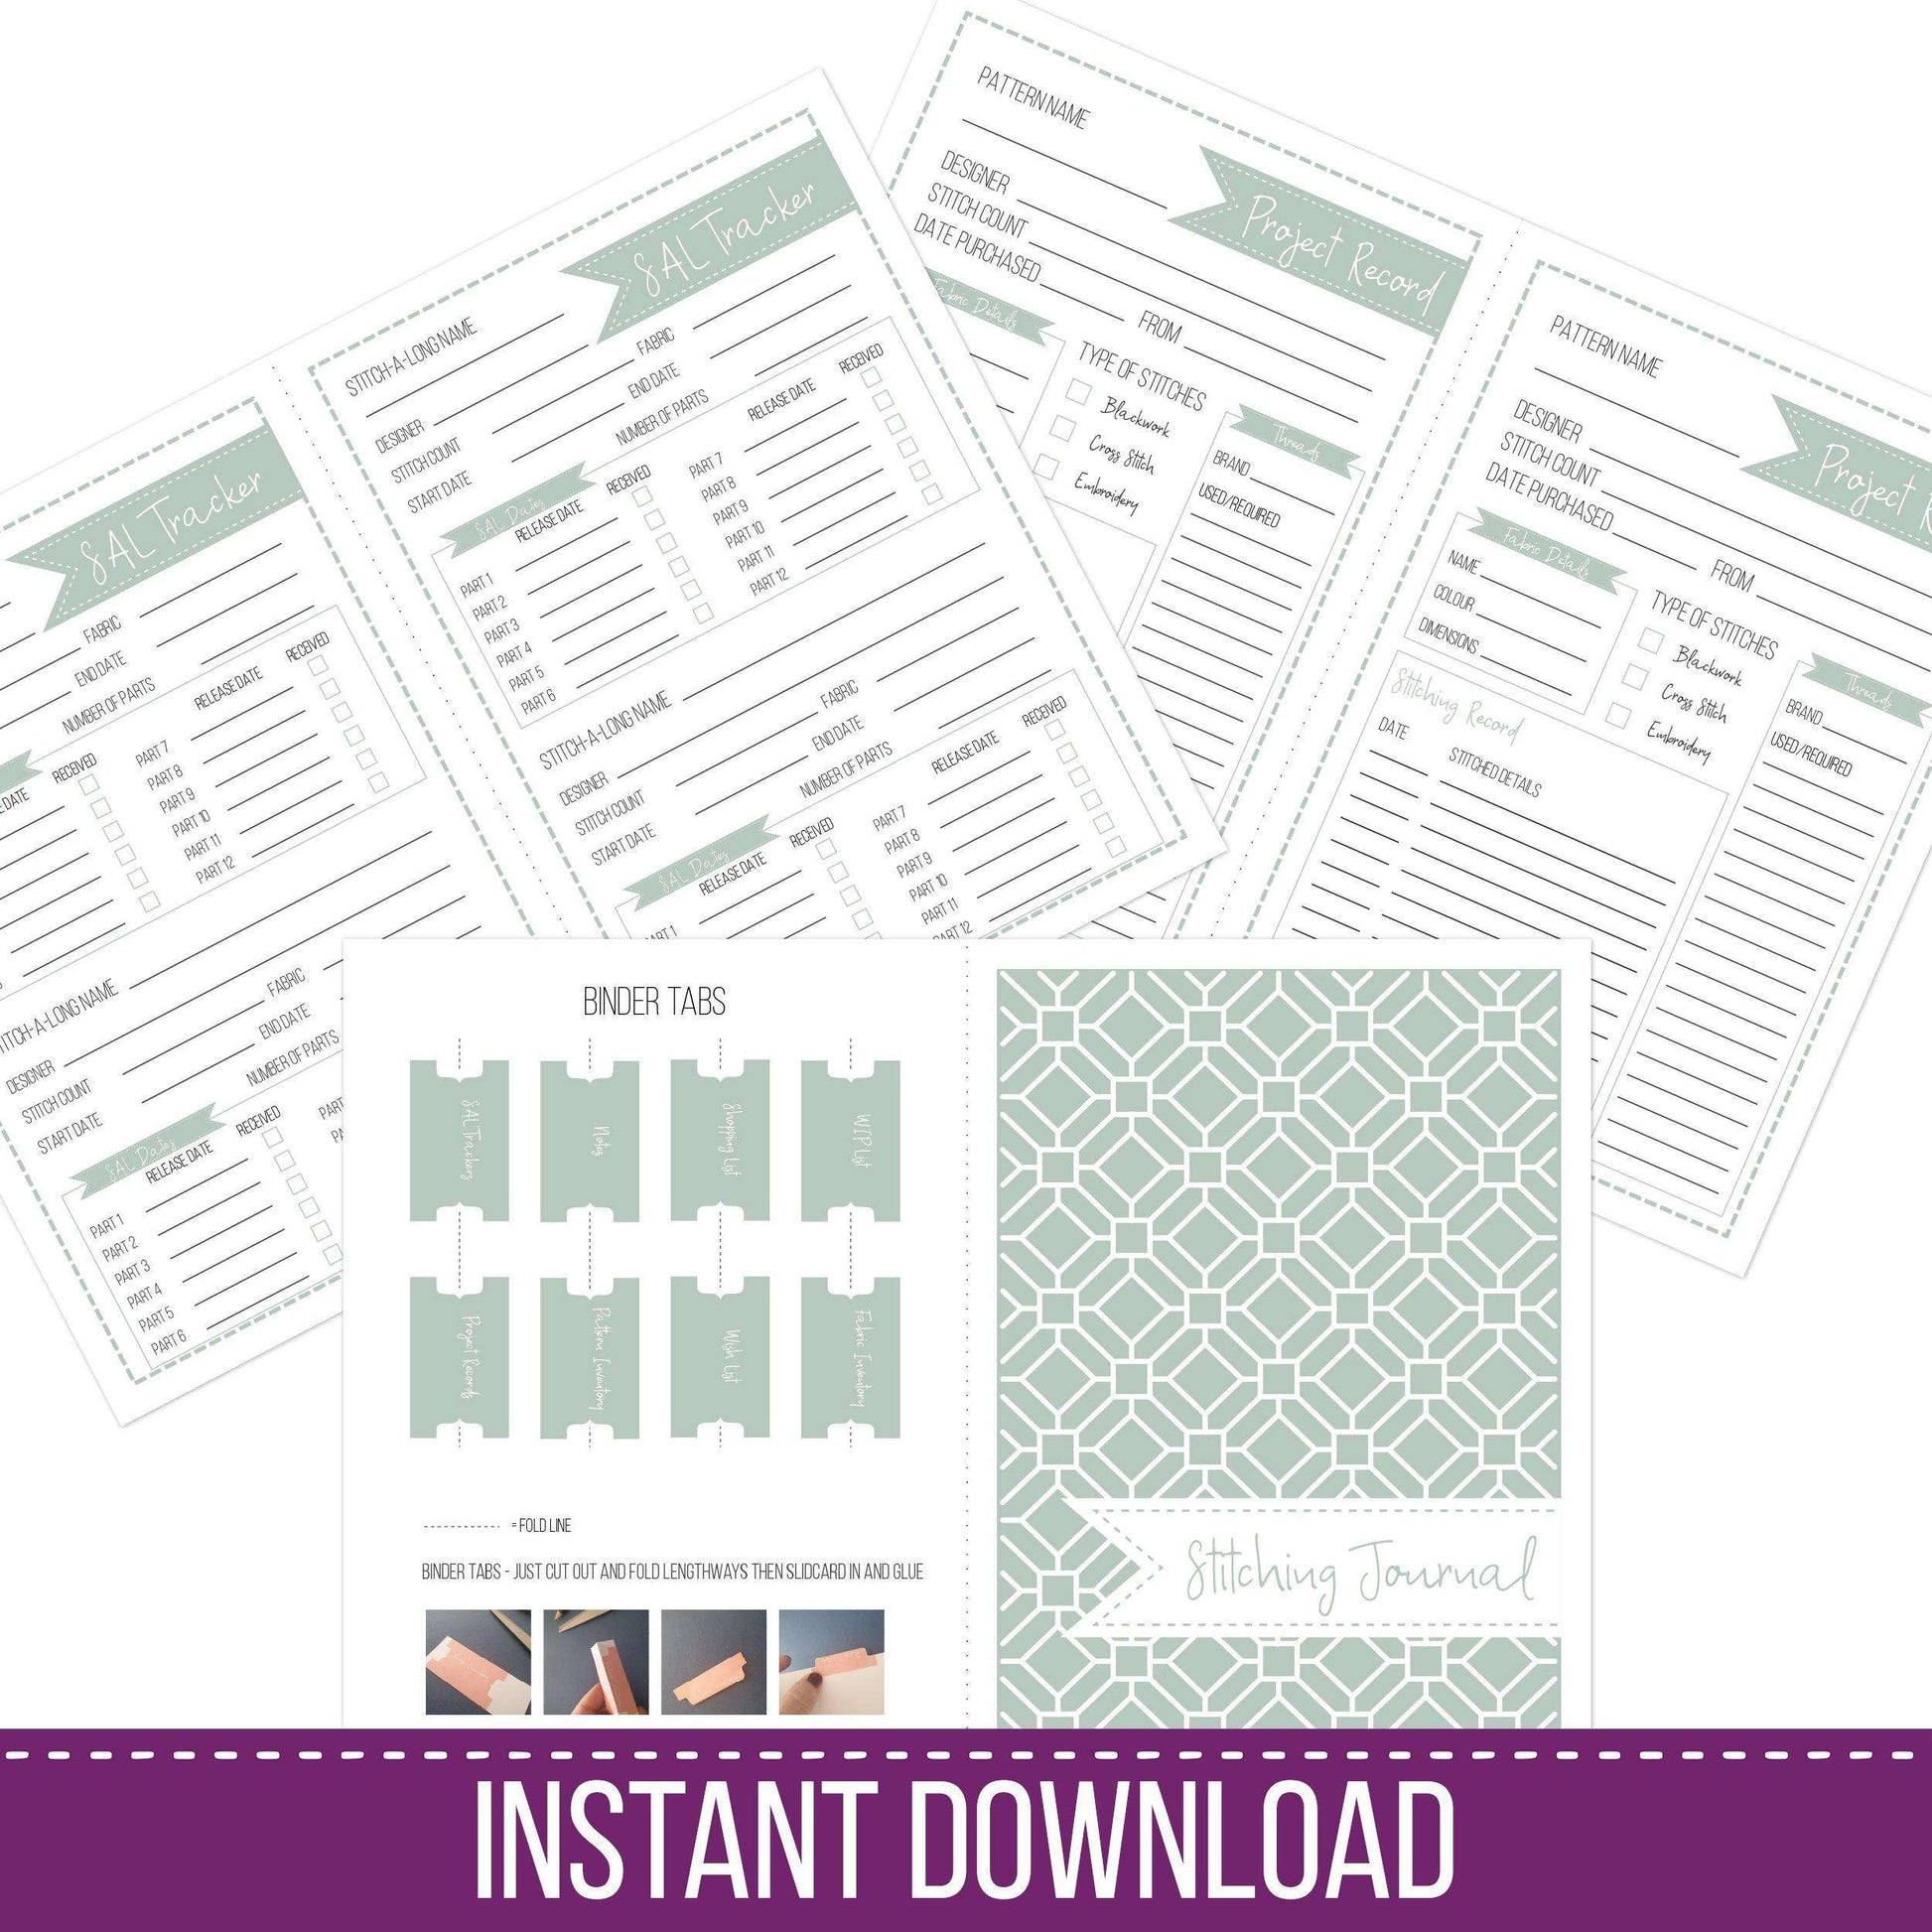 Stitching Journal - Instant Download - Blackwork Patterns & Cross Stitch by Peppermint Purple